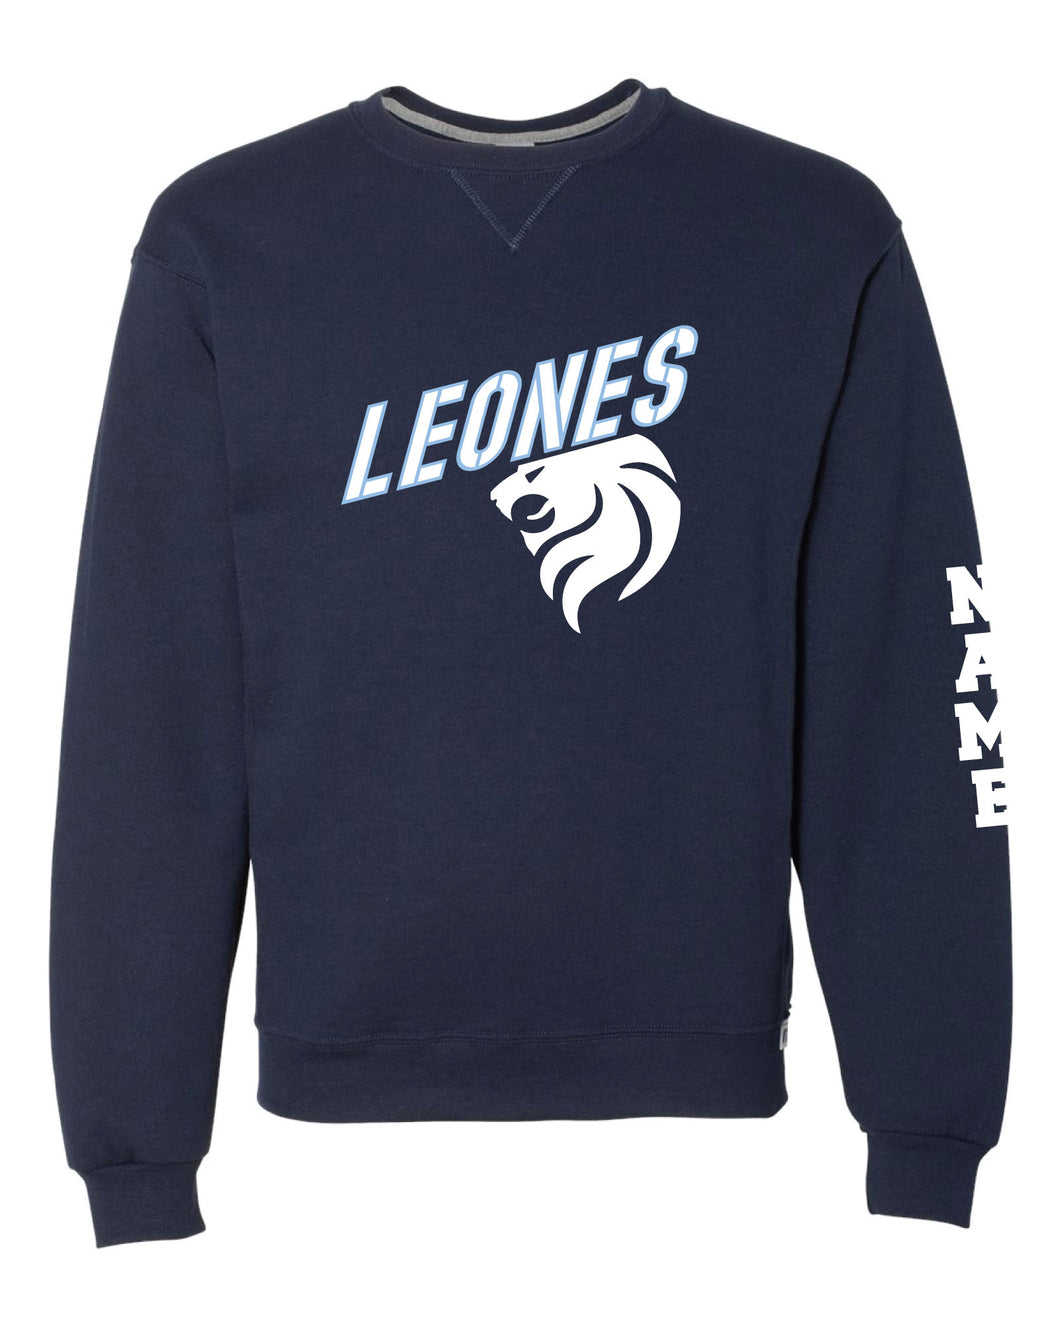 Leones Baseball Cotton Crewneck Sweatshirt - Navy - 5KounT